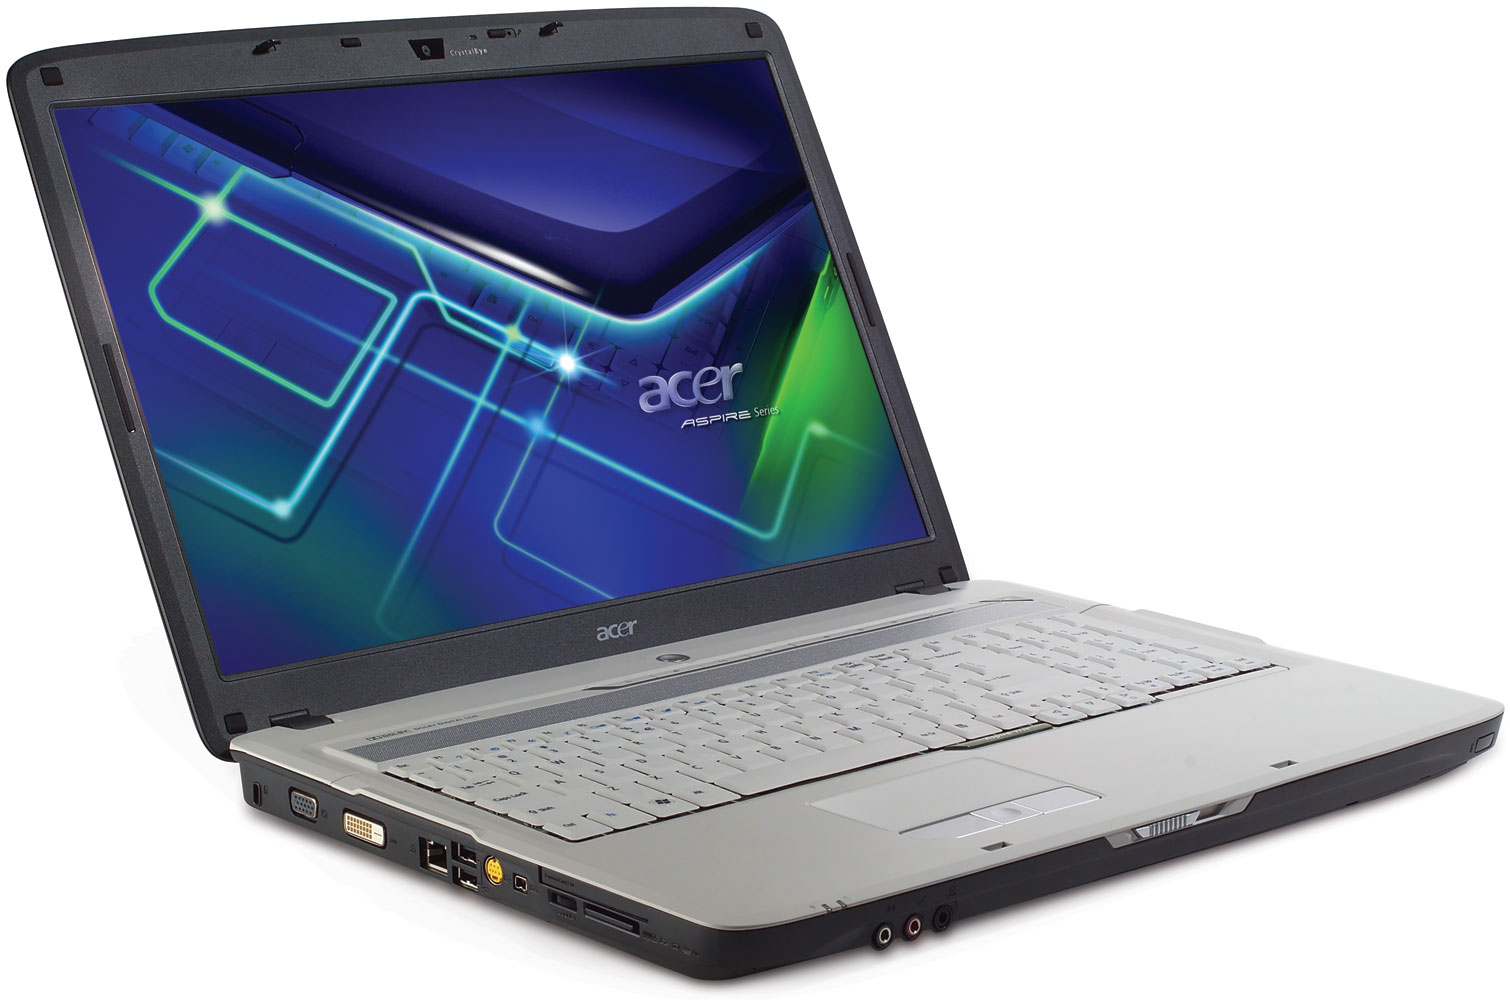 Acer 7530 user Manual | Free Online Manual